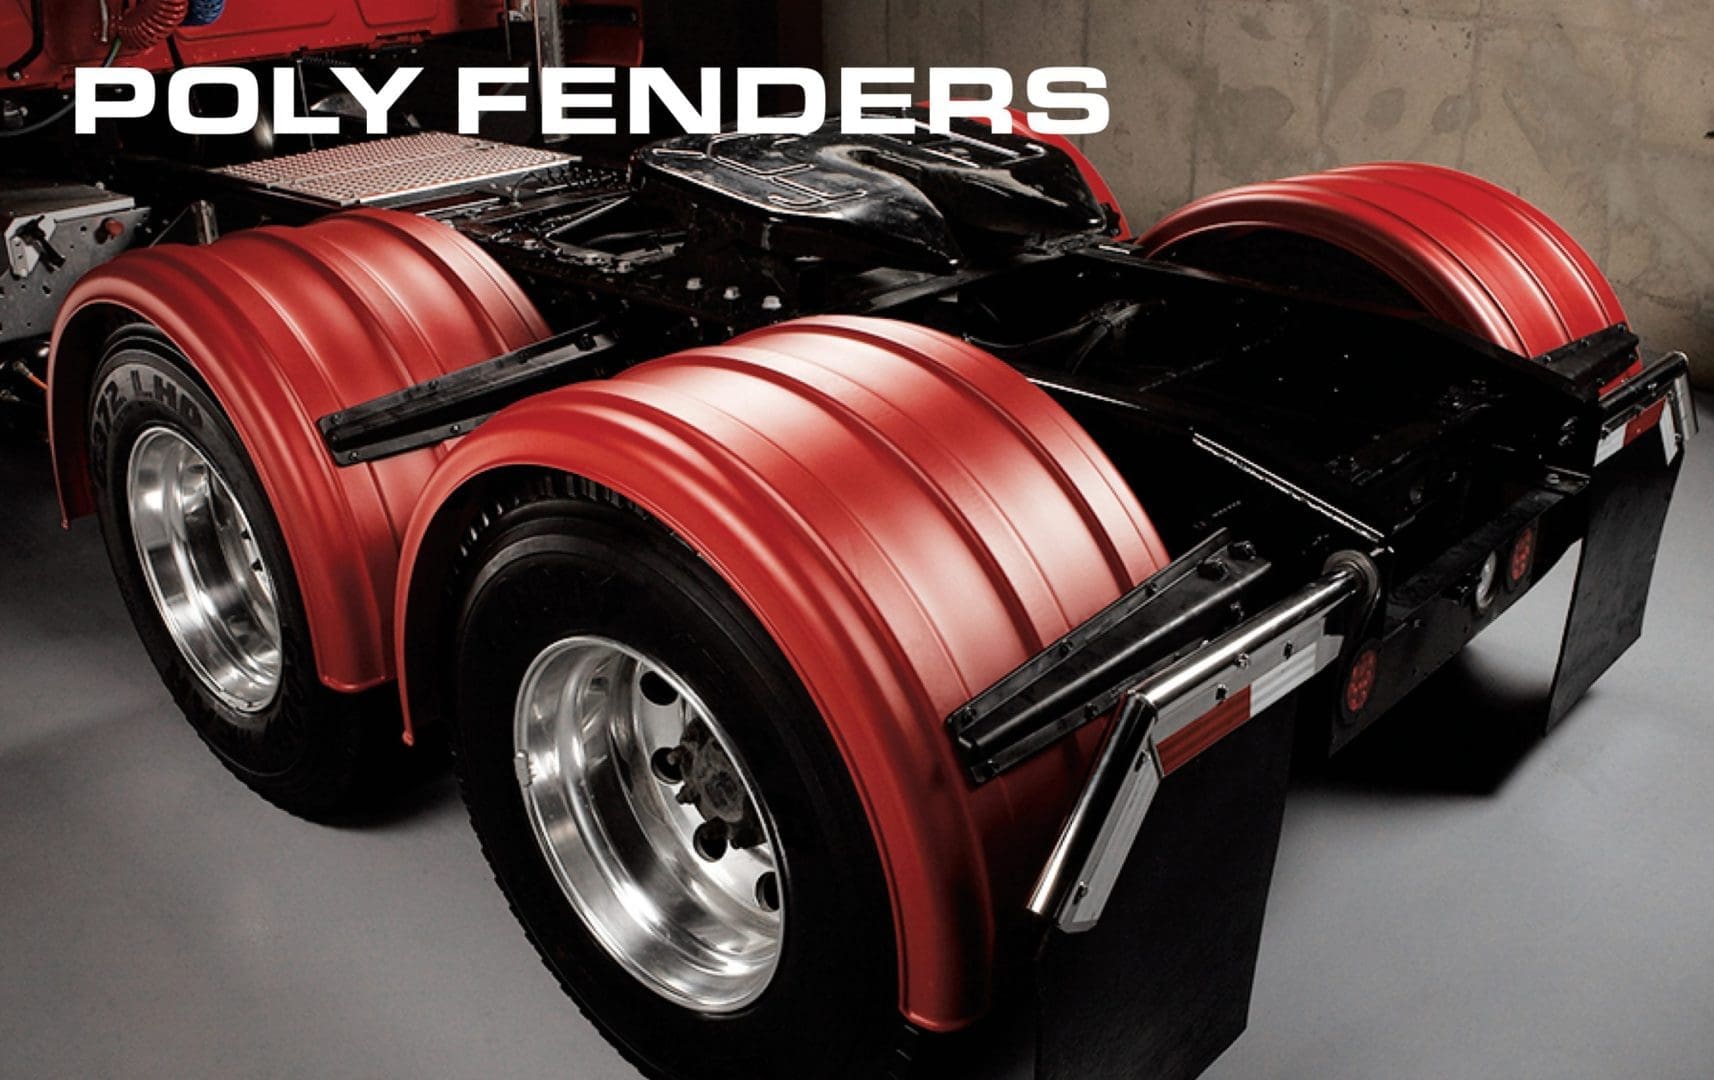 Fenders – Minimizer